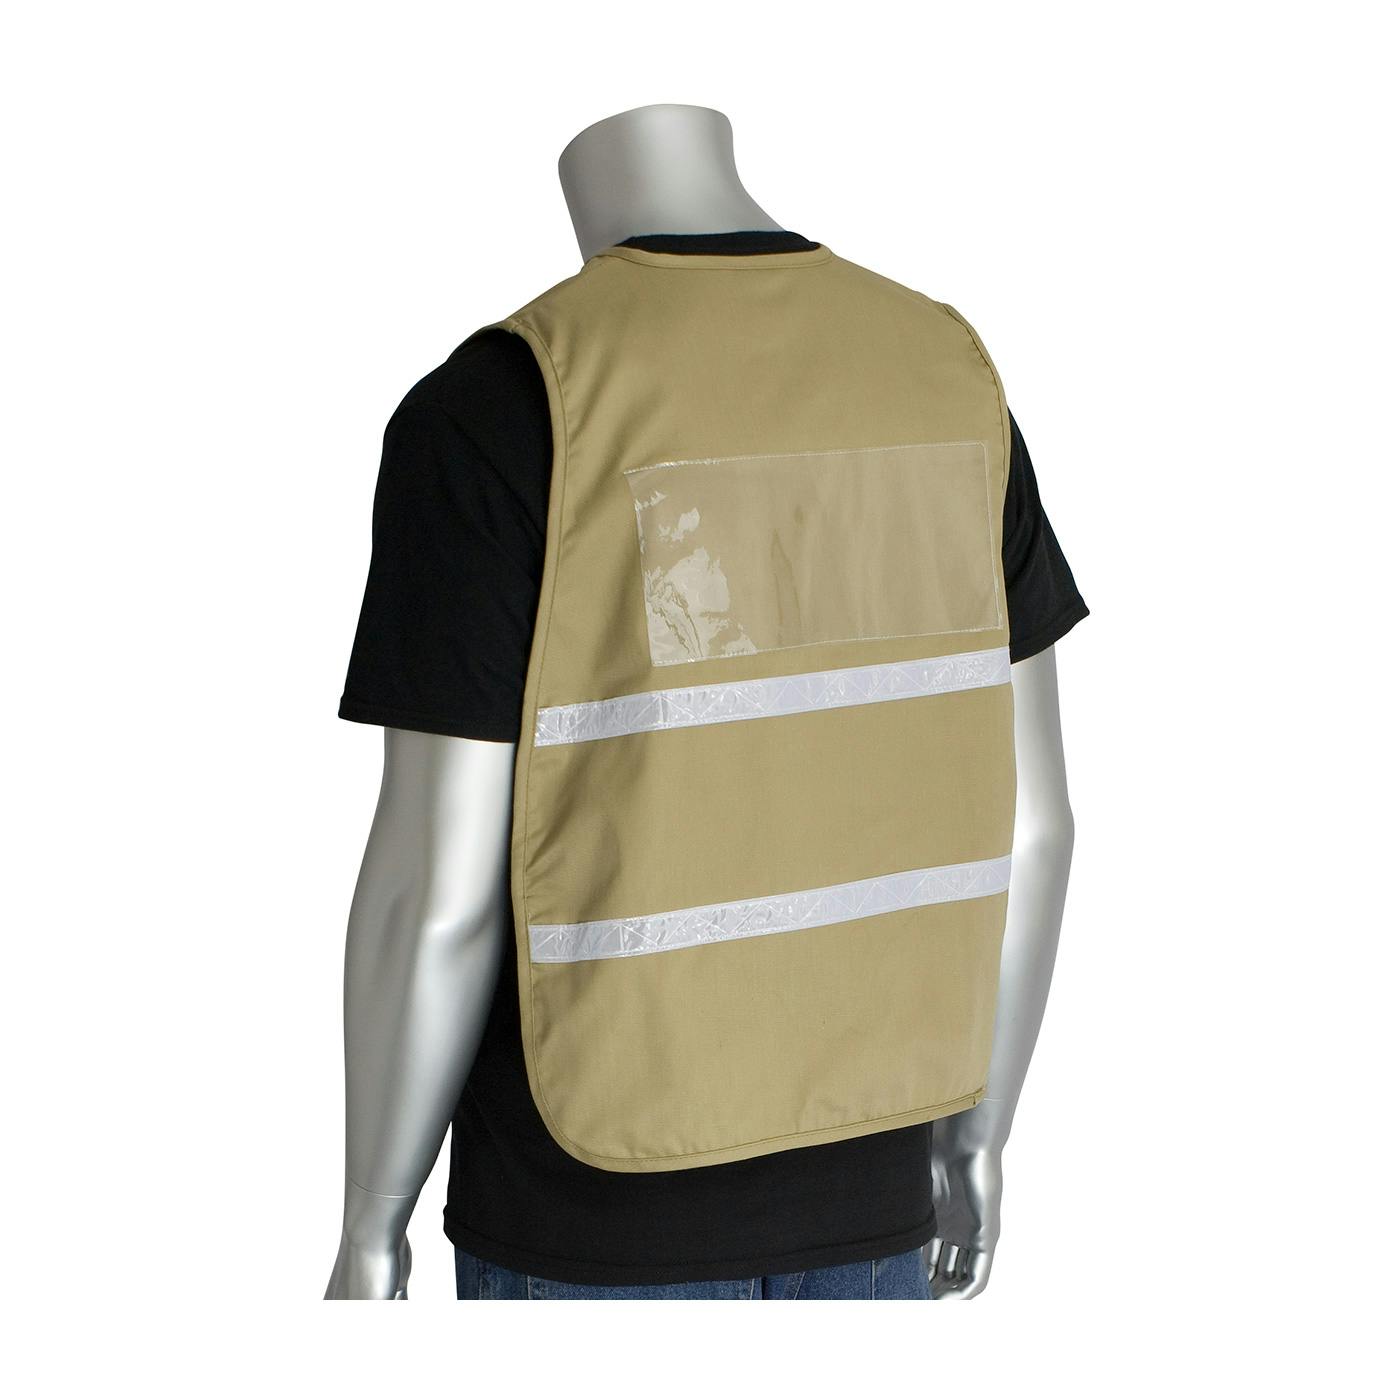 Non-ANSI Incident Command Vest - Cotton/Polyester Blend, Tan (300-2506)_0